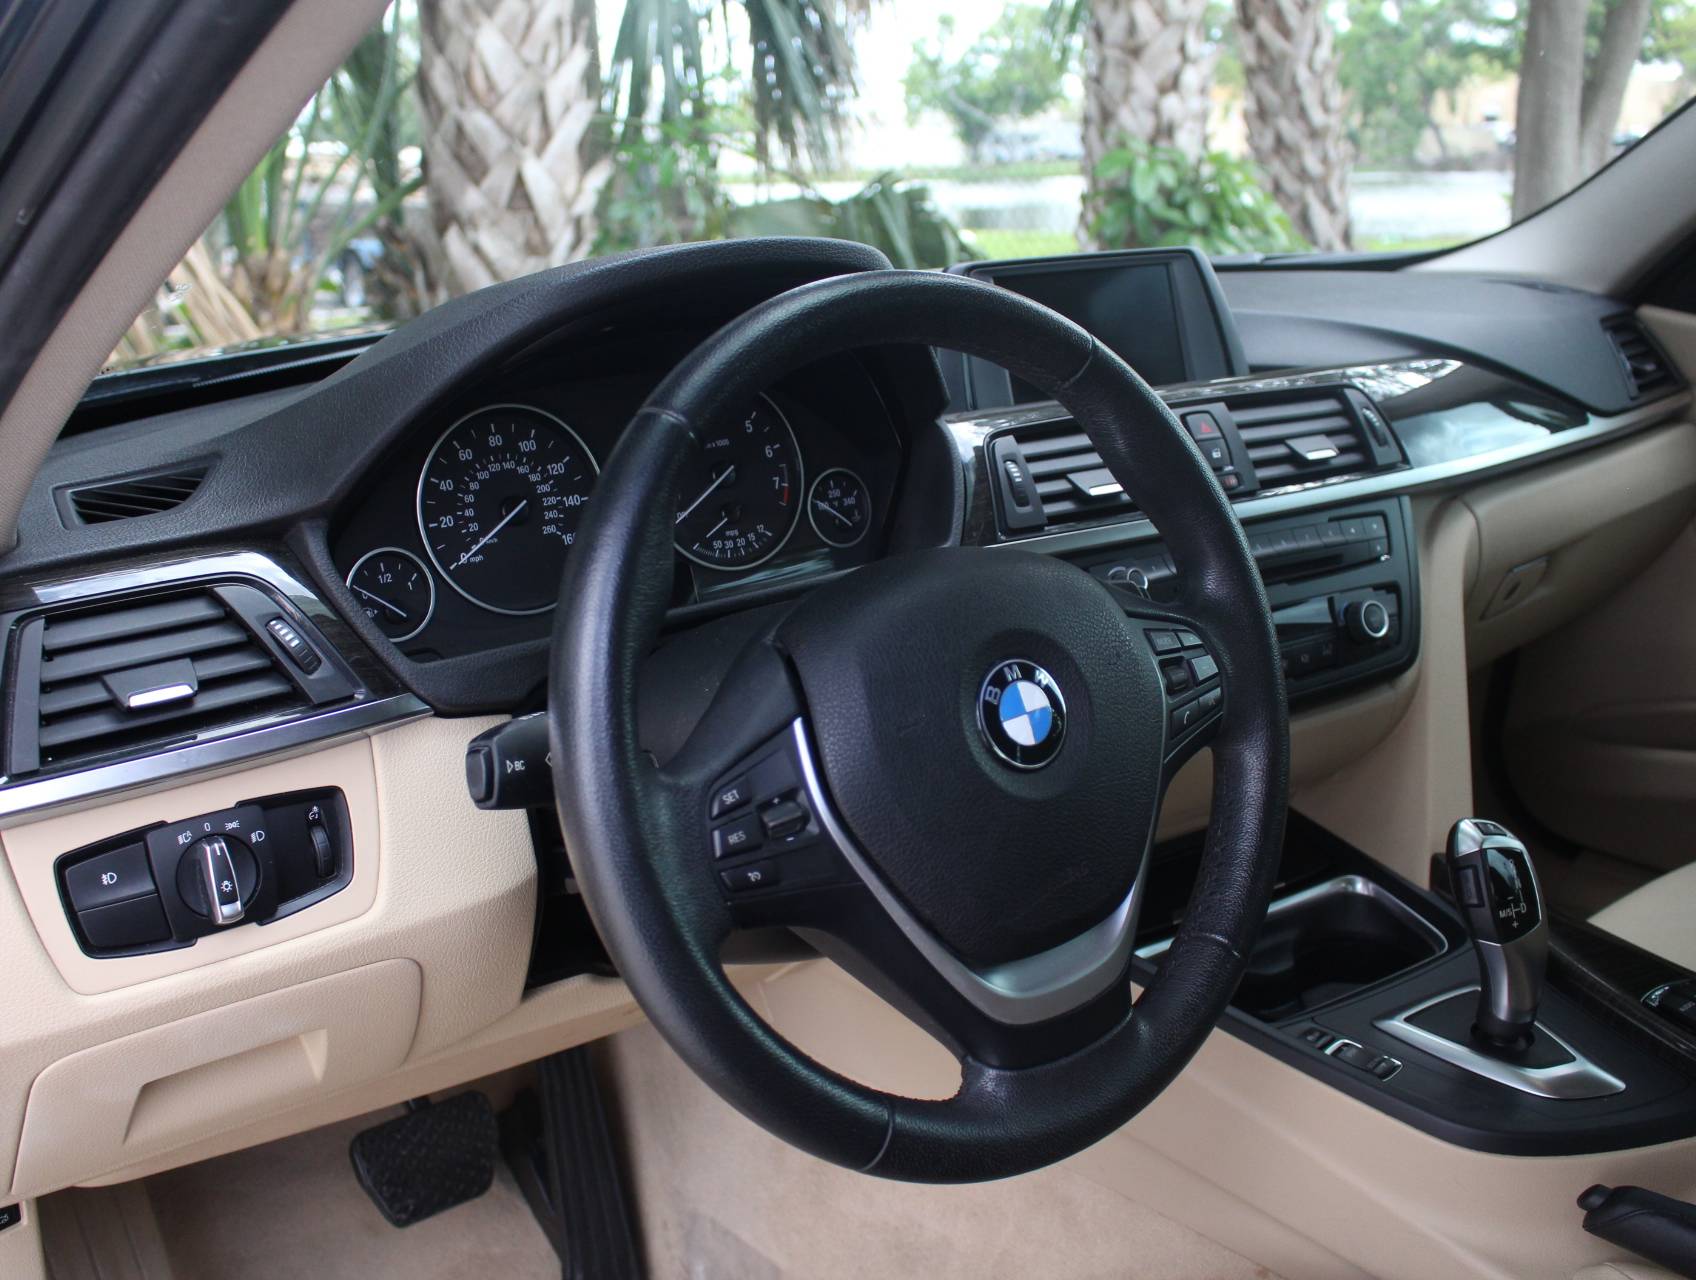 Florida Fine Cars - Used BMW 3 SERIES 2015 MARGATE 328I